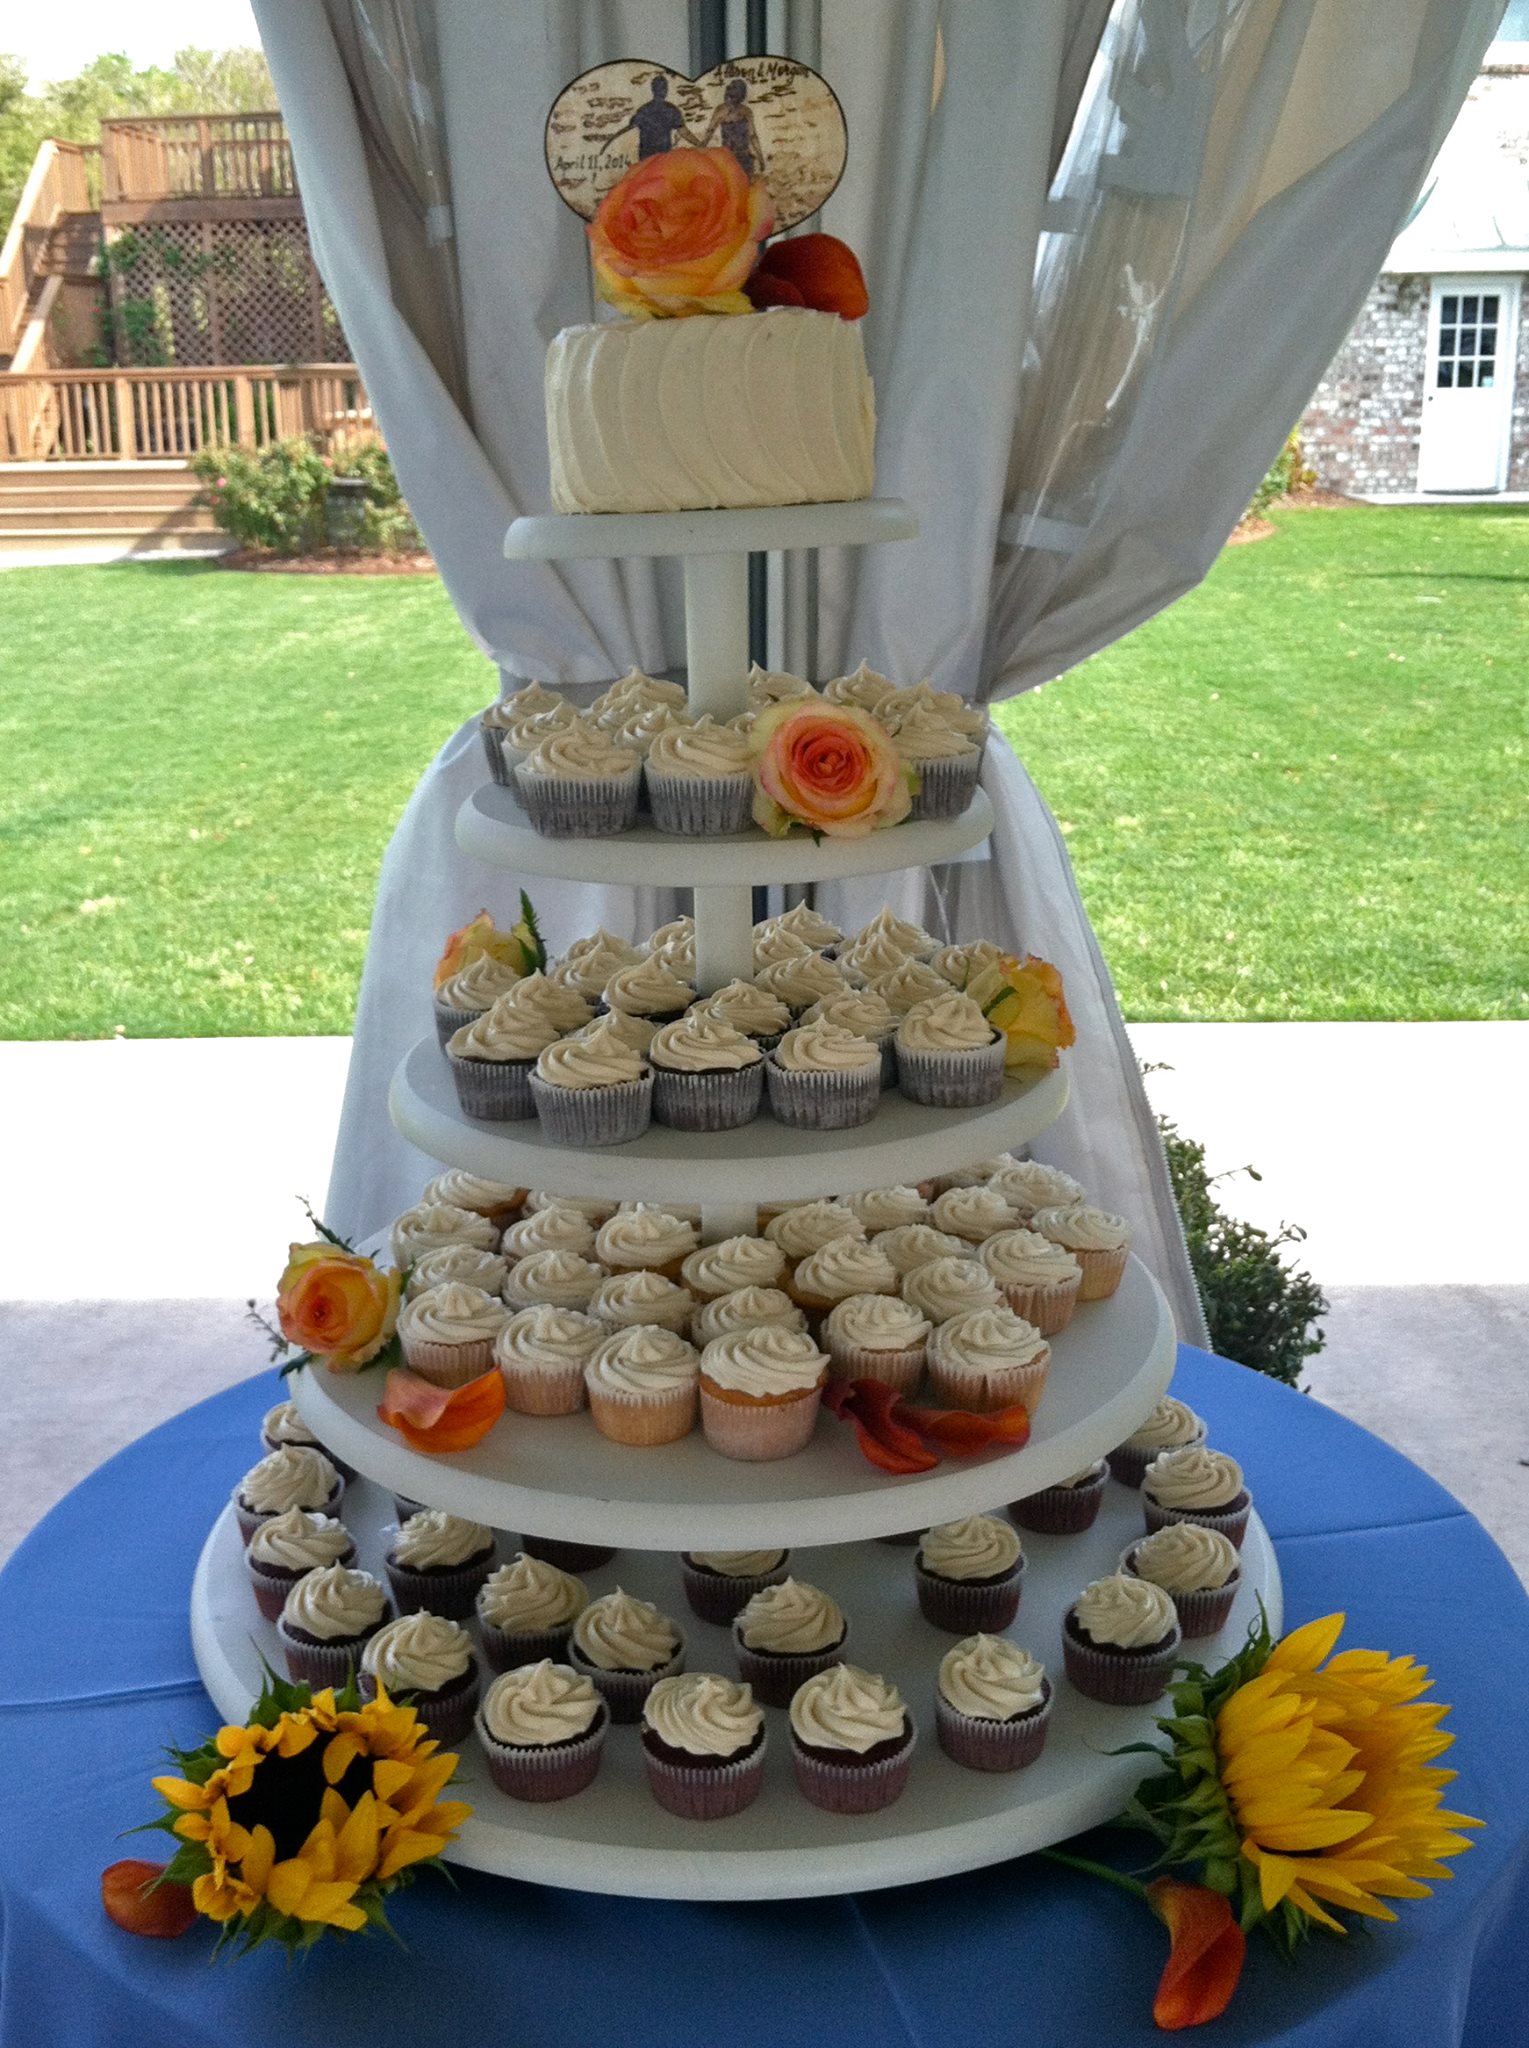 Allison + Morgan’s Wedding red velvet cake plus cupcakes